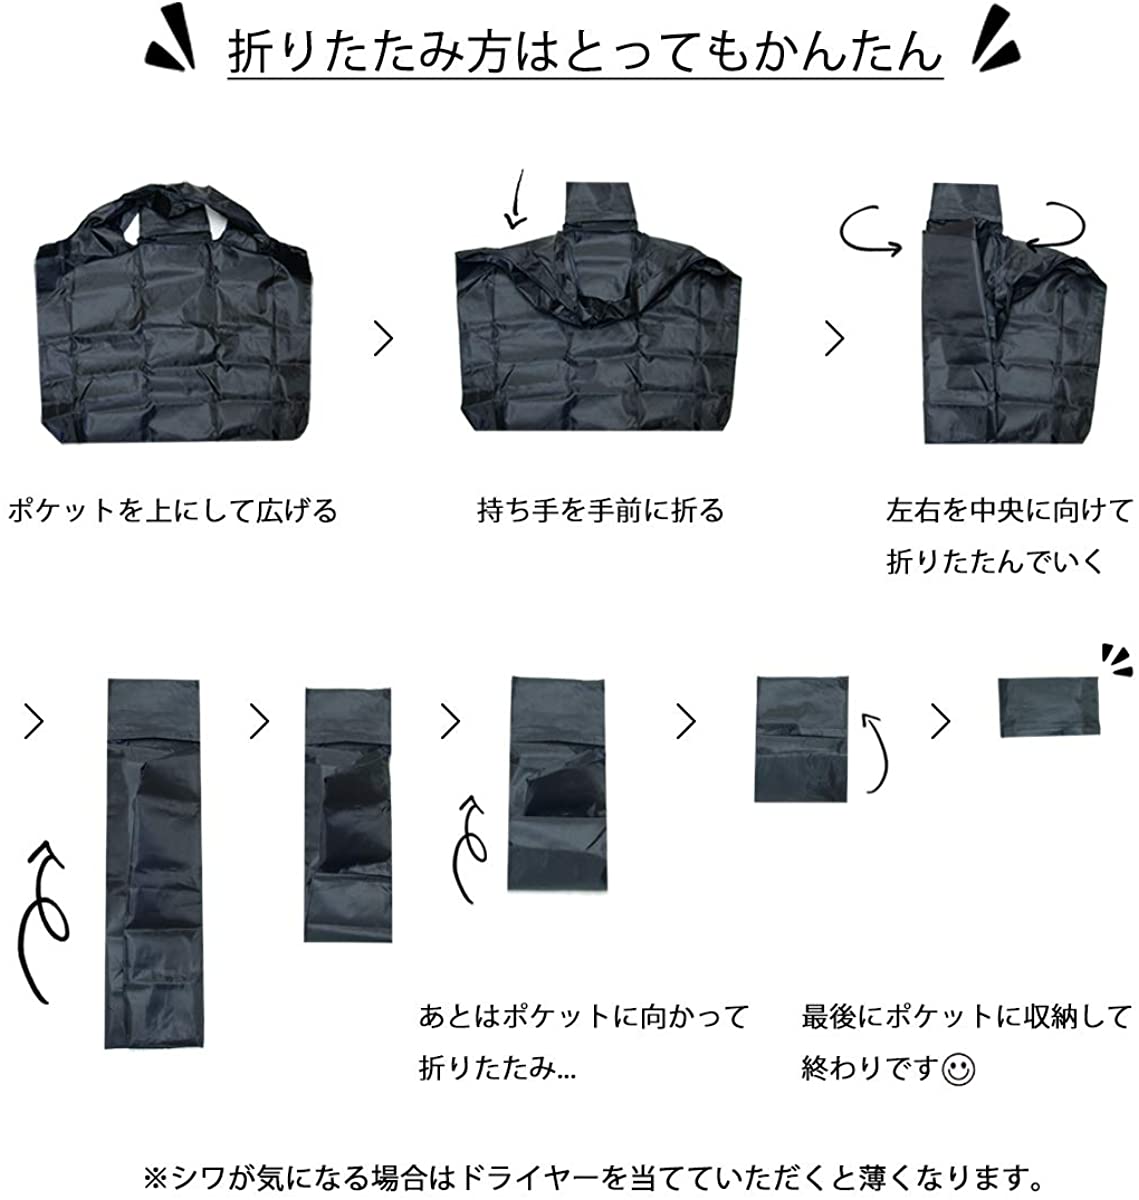  eko-bag men's lady's stylish high capacity folding reji bag compact small light mail service free shipping Father's day 